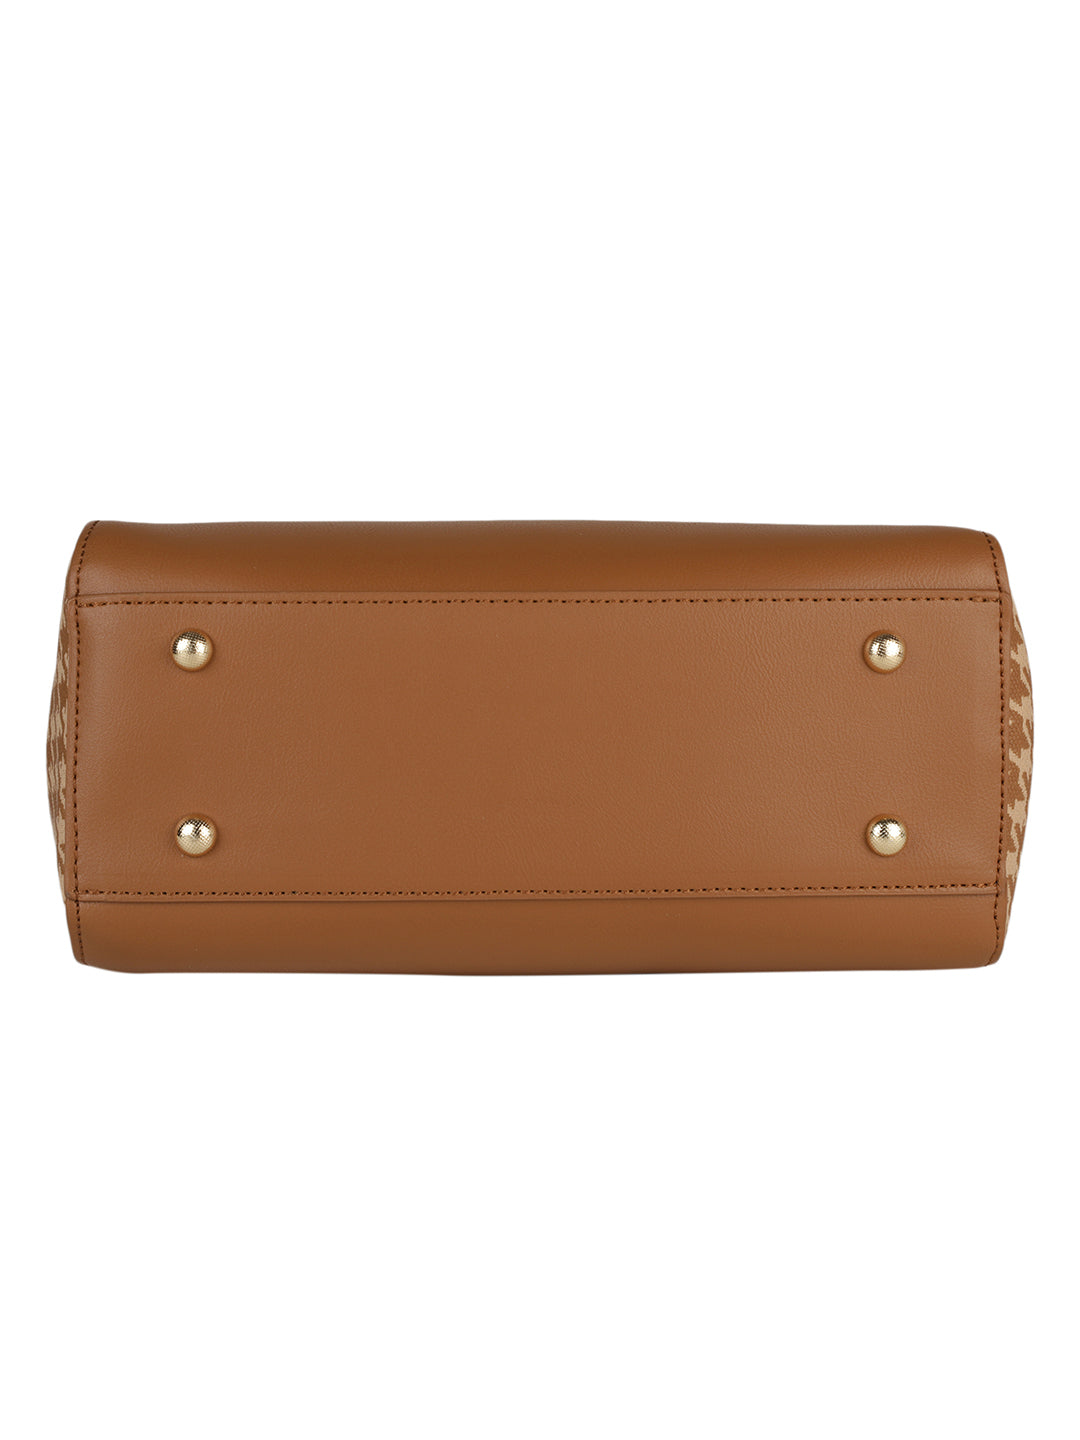 MINI WESST Women's Brown Handheld Bag(MWHB111BR)